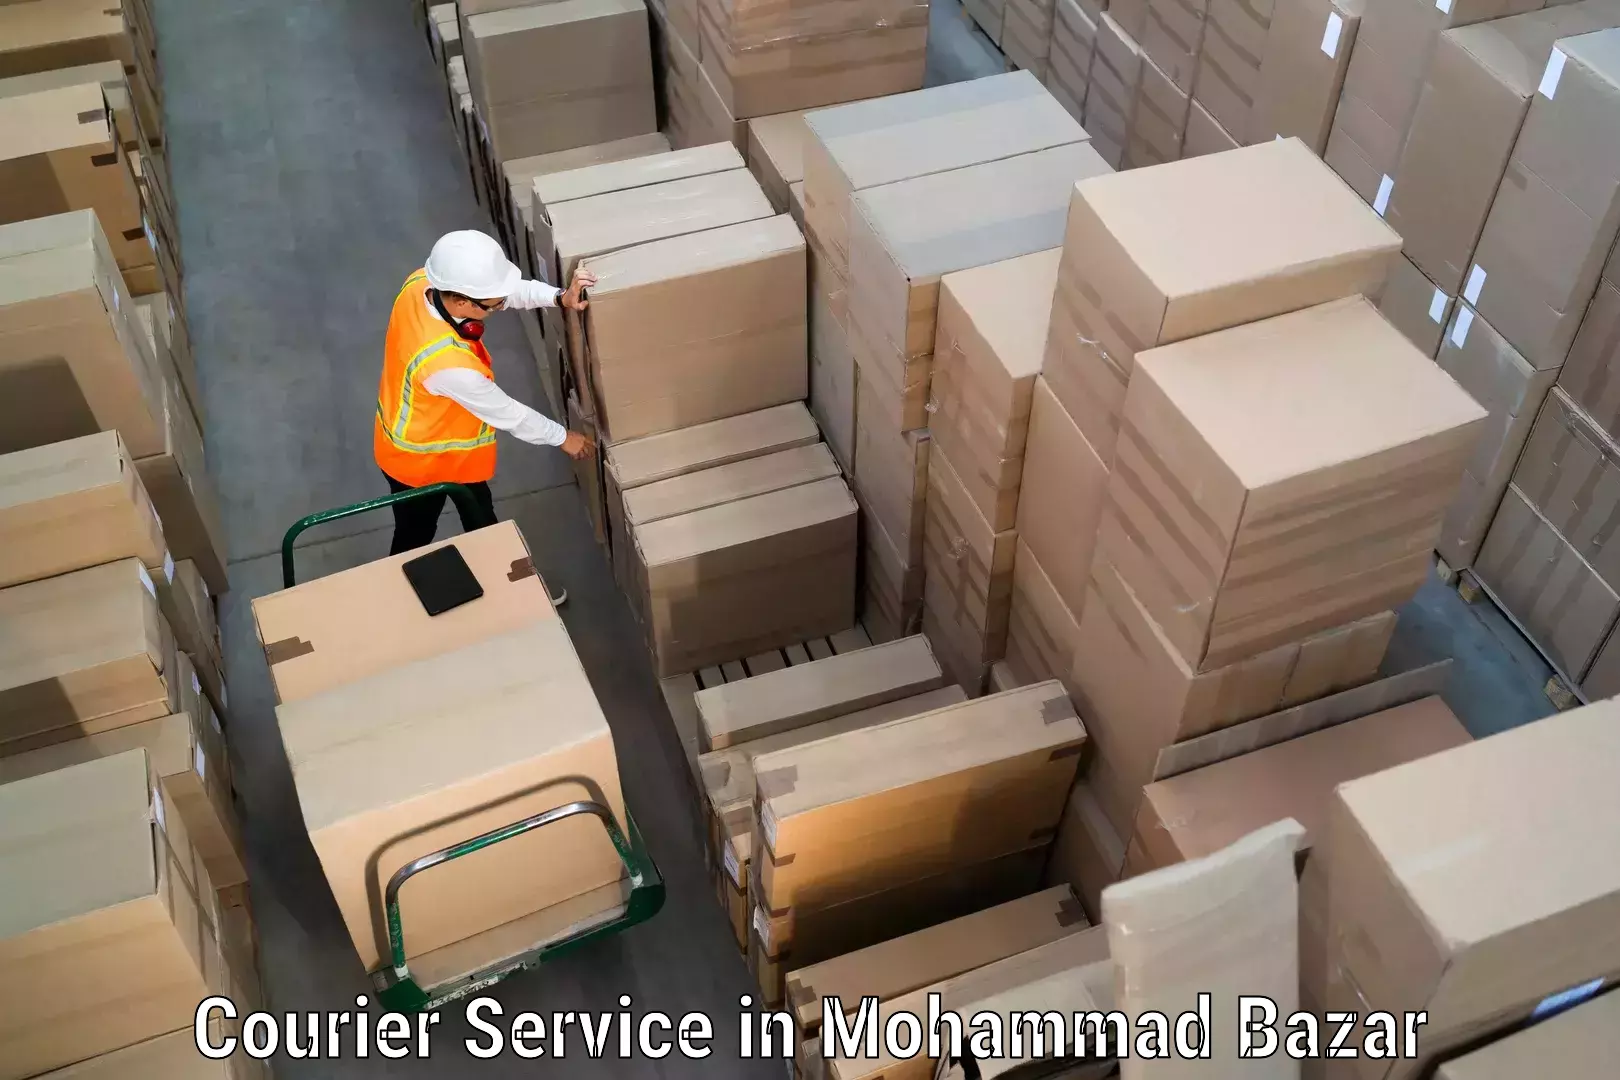 Digital shipping tools in Mohammad Bazar